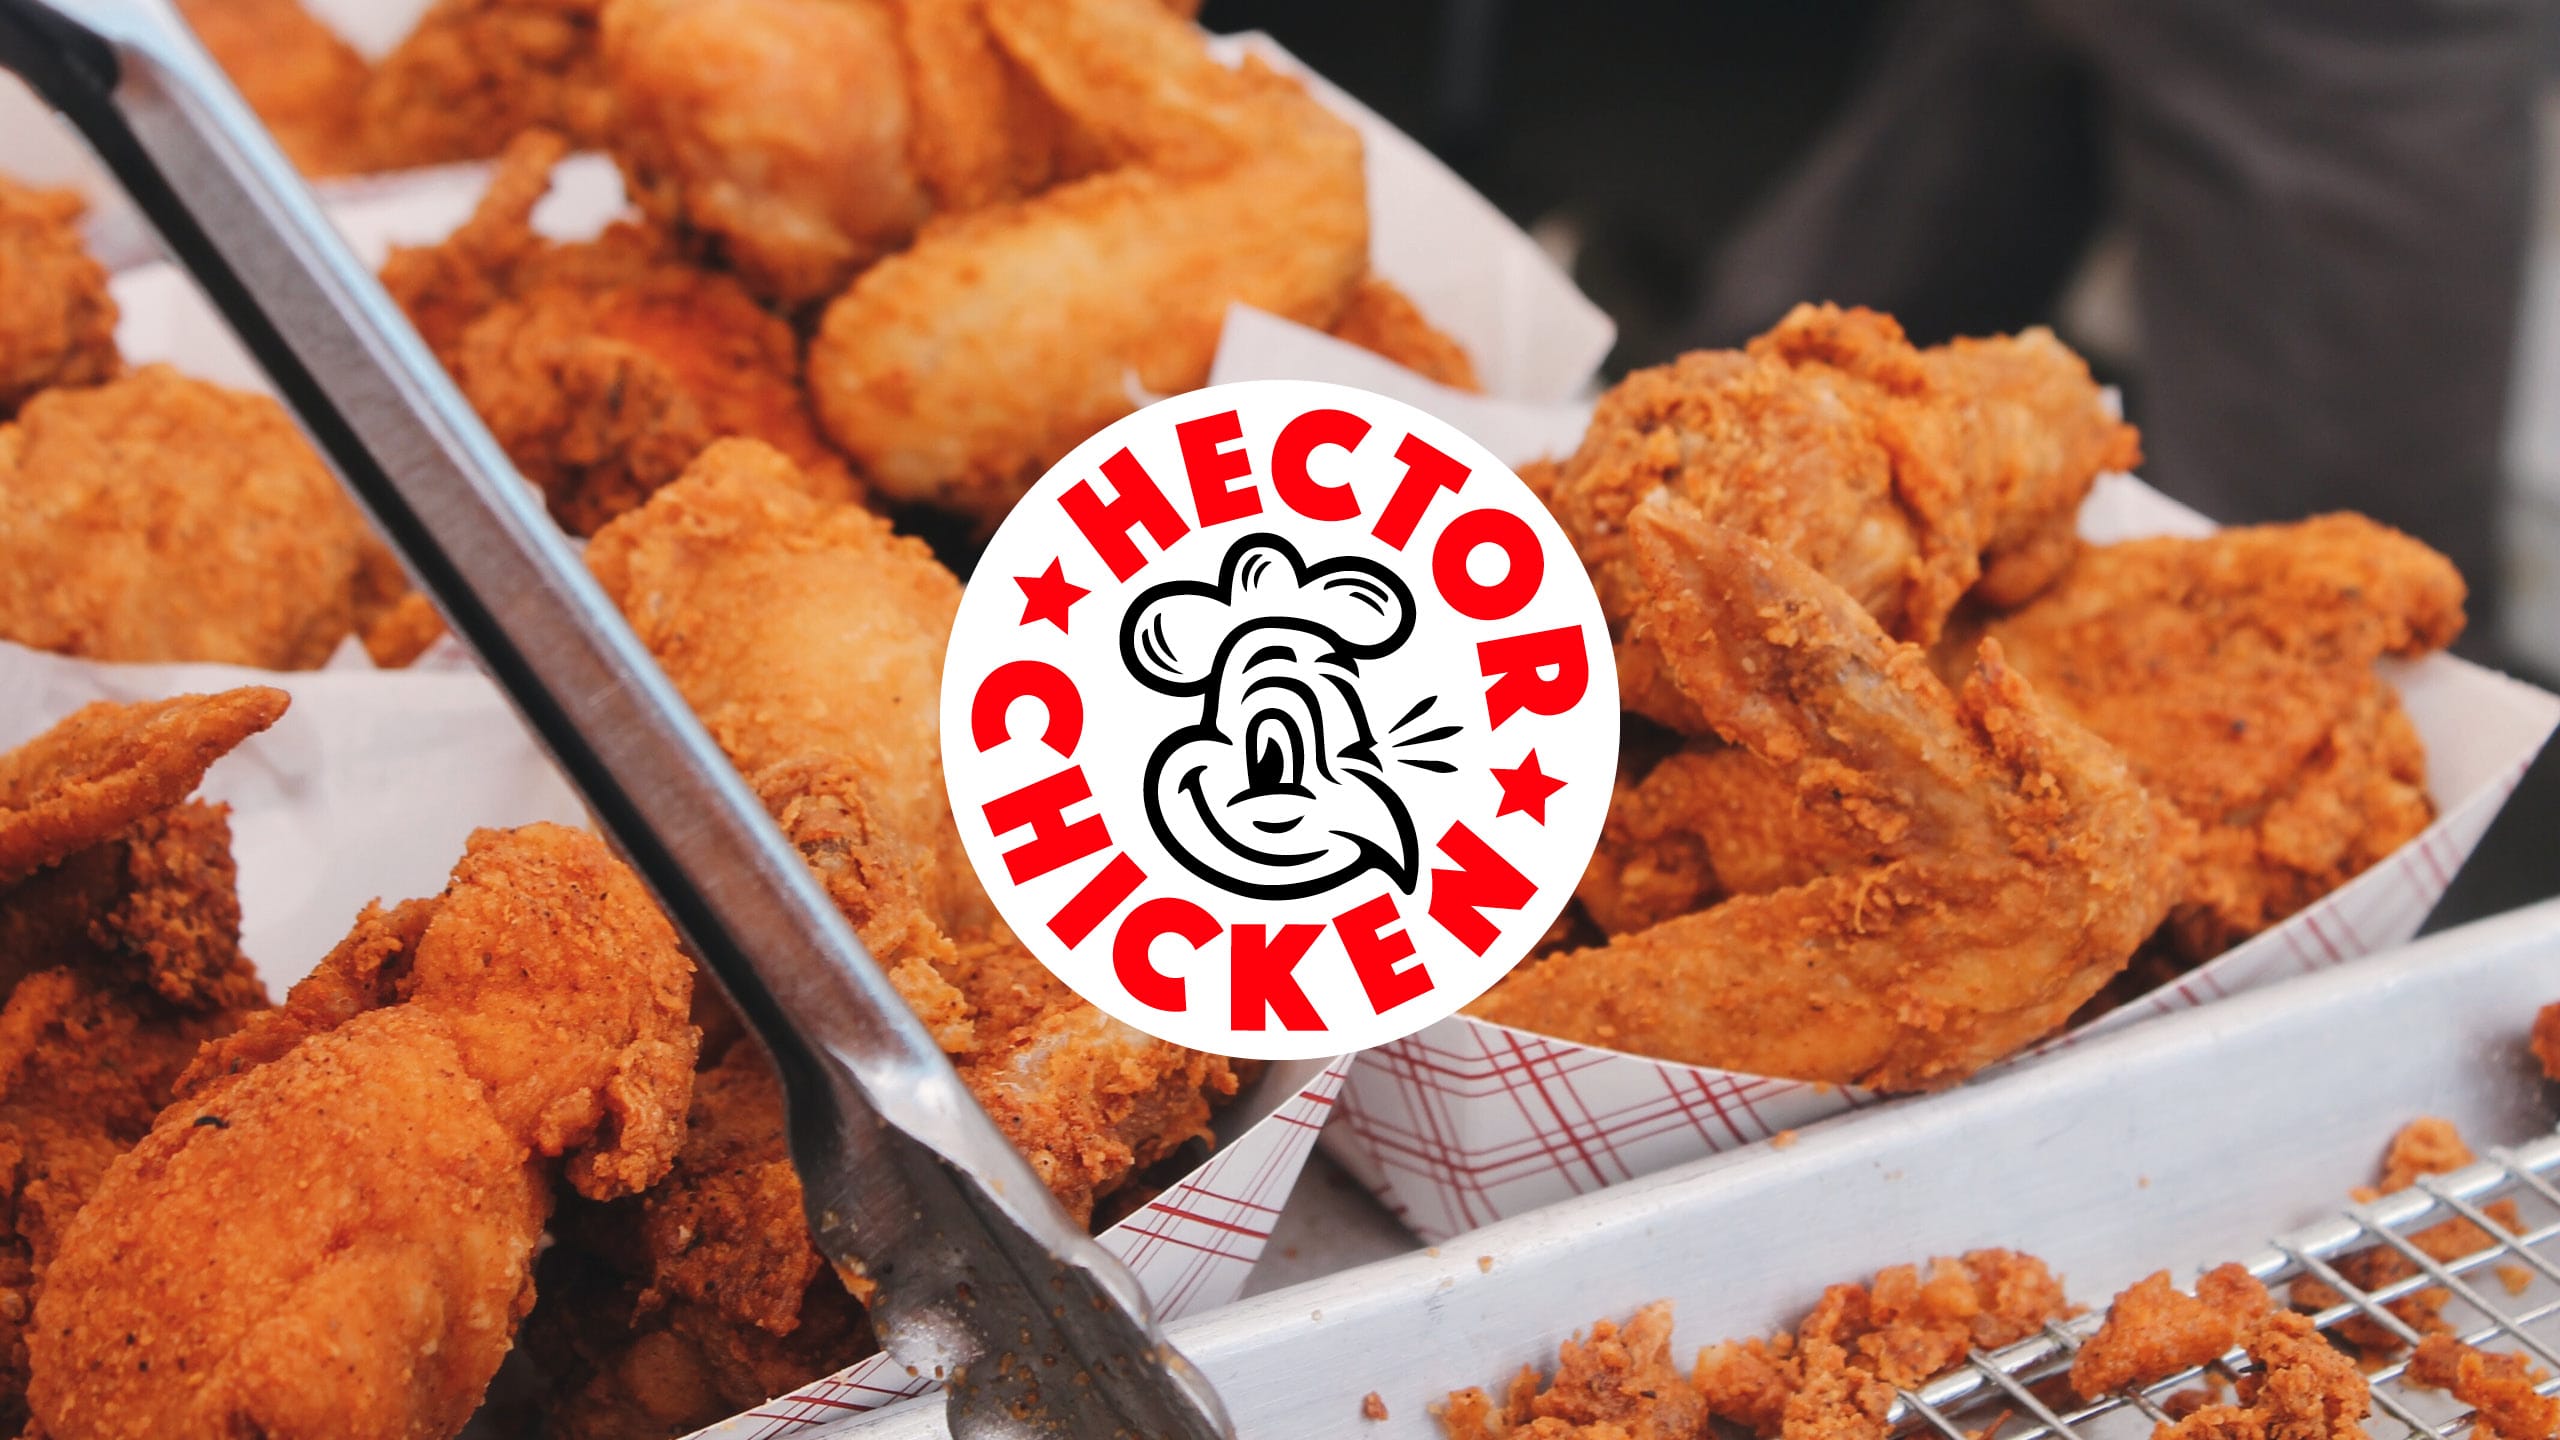 Hector-chicken-branding-logo-photography